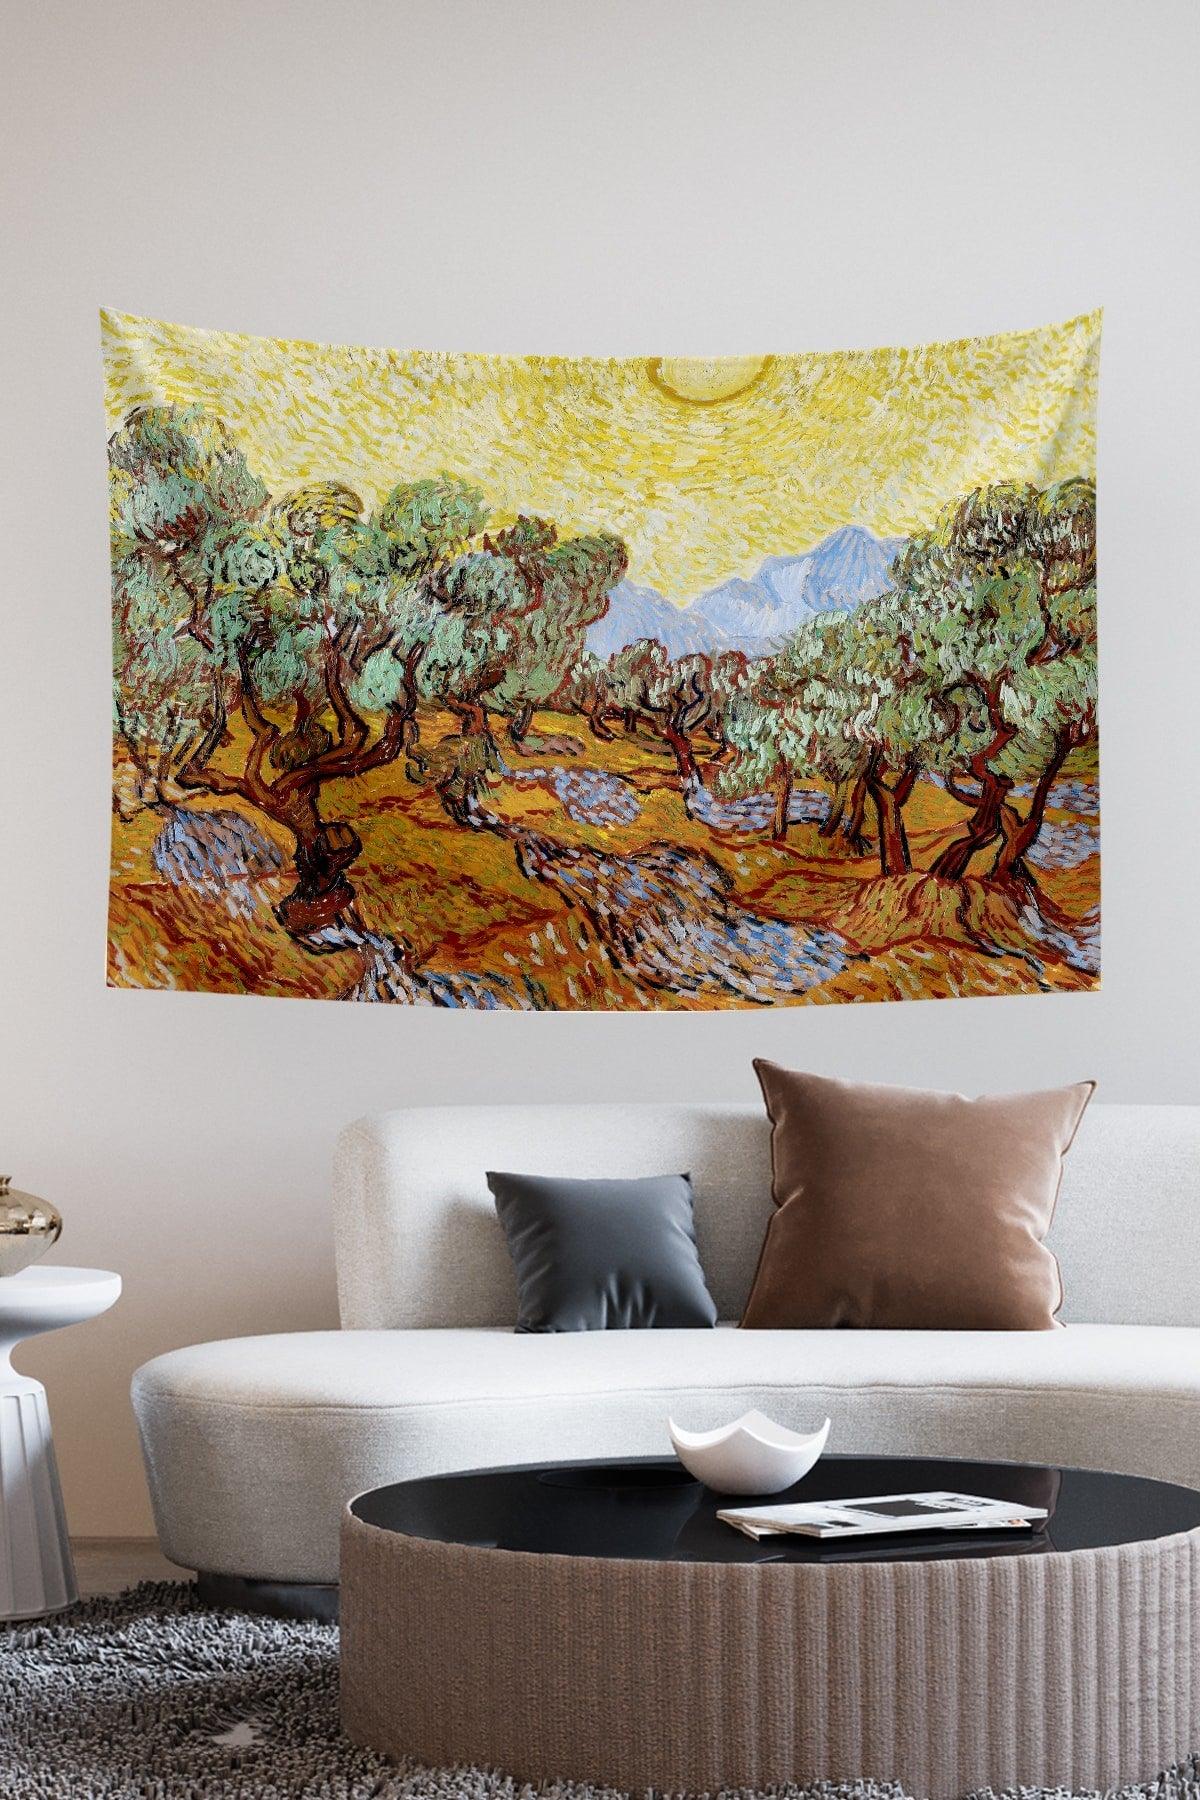 Van Gogh Olive Trees Wall Covering Carpet 140 X 100 Cm-70x100 Cm - Swordslife